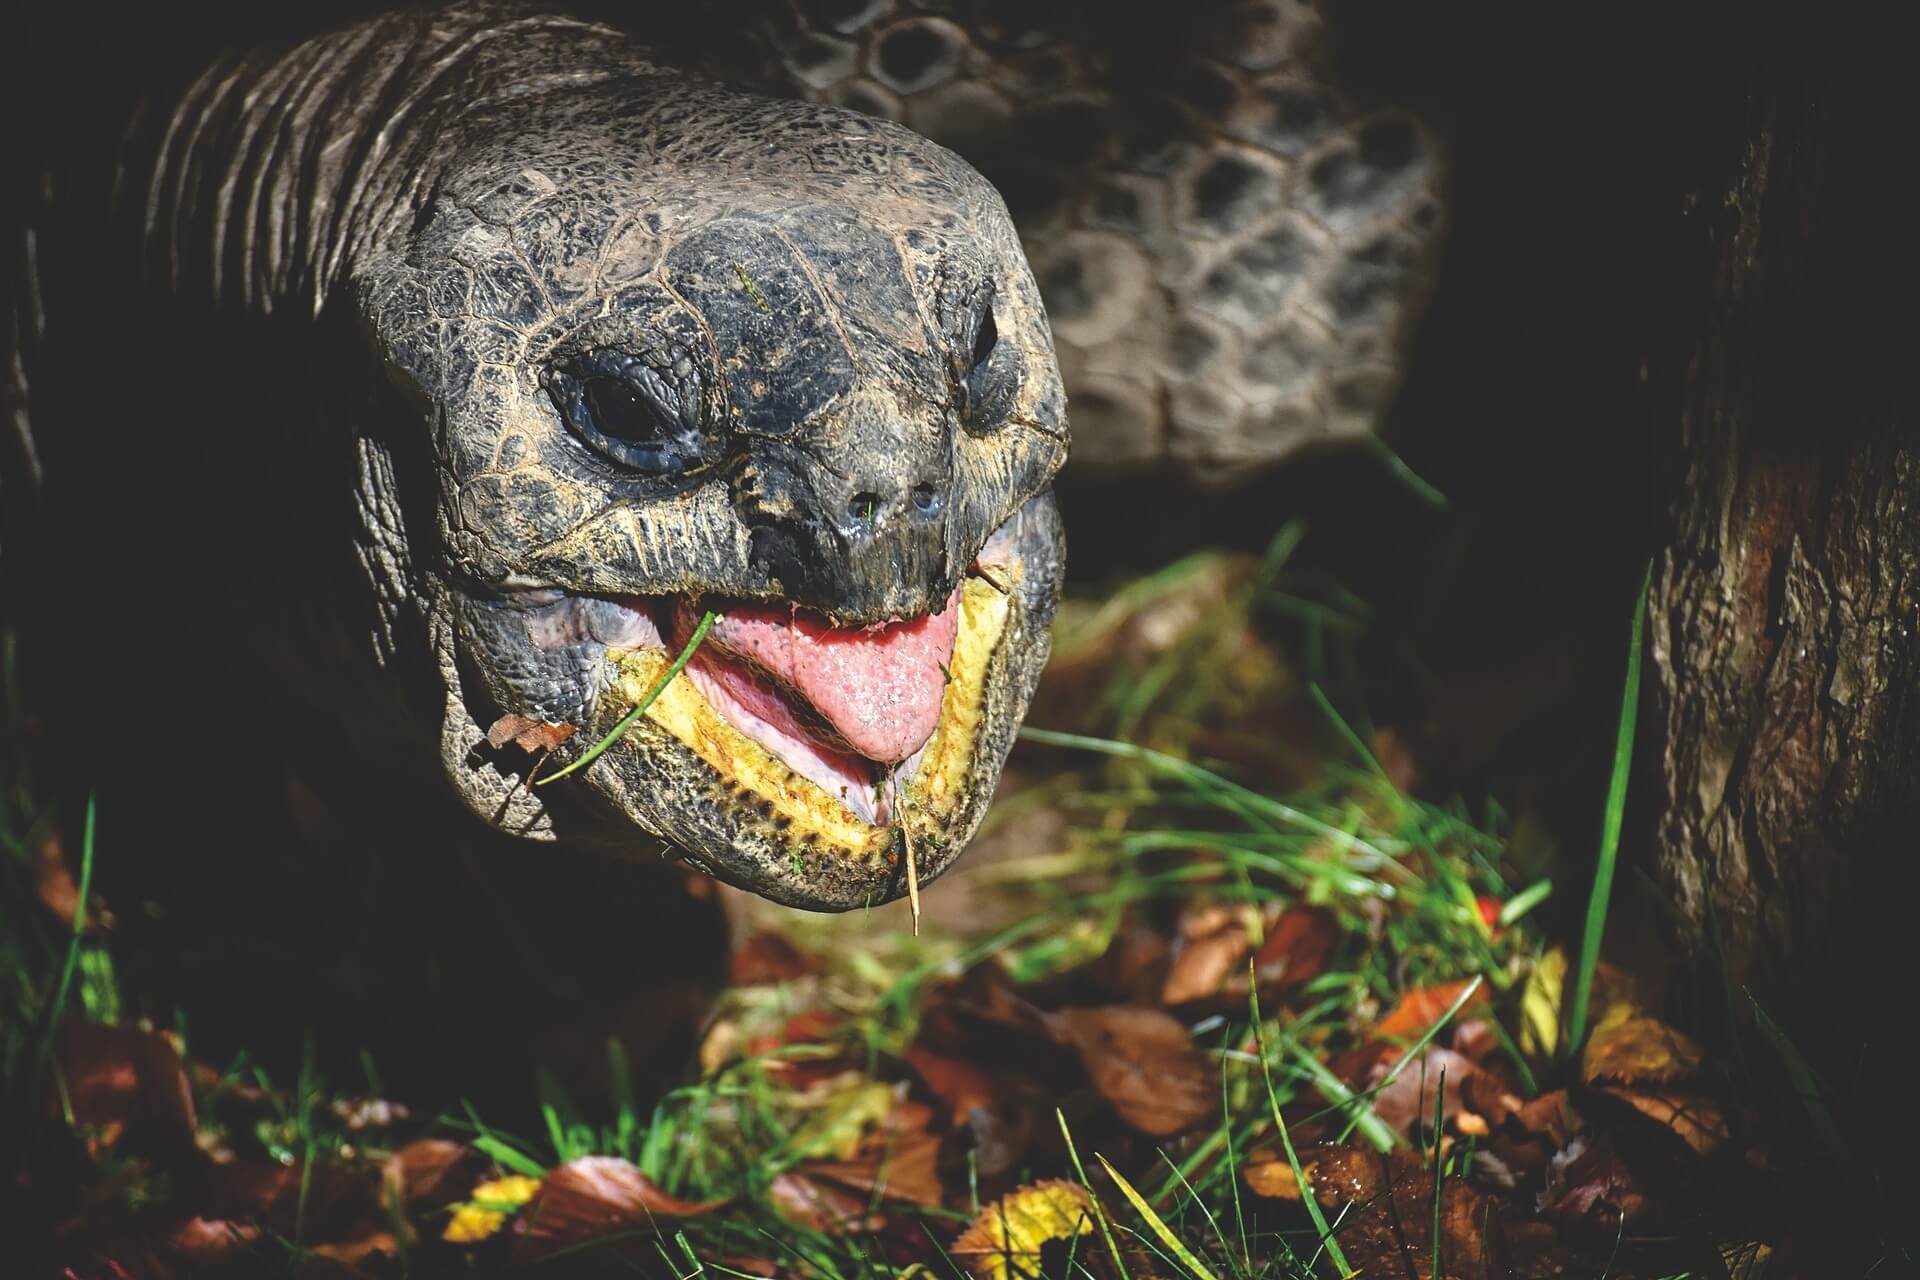 A giant tortoise snacks on some fresh wet grass